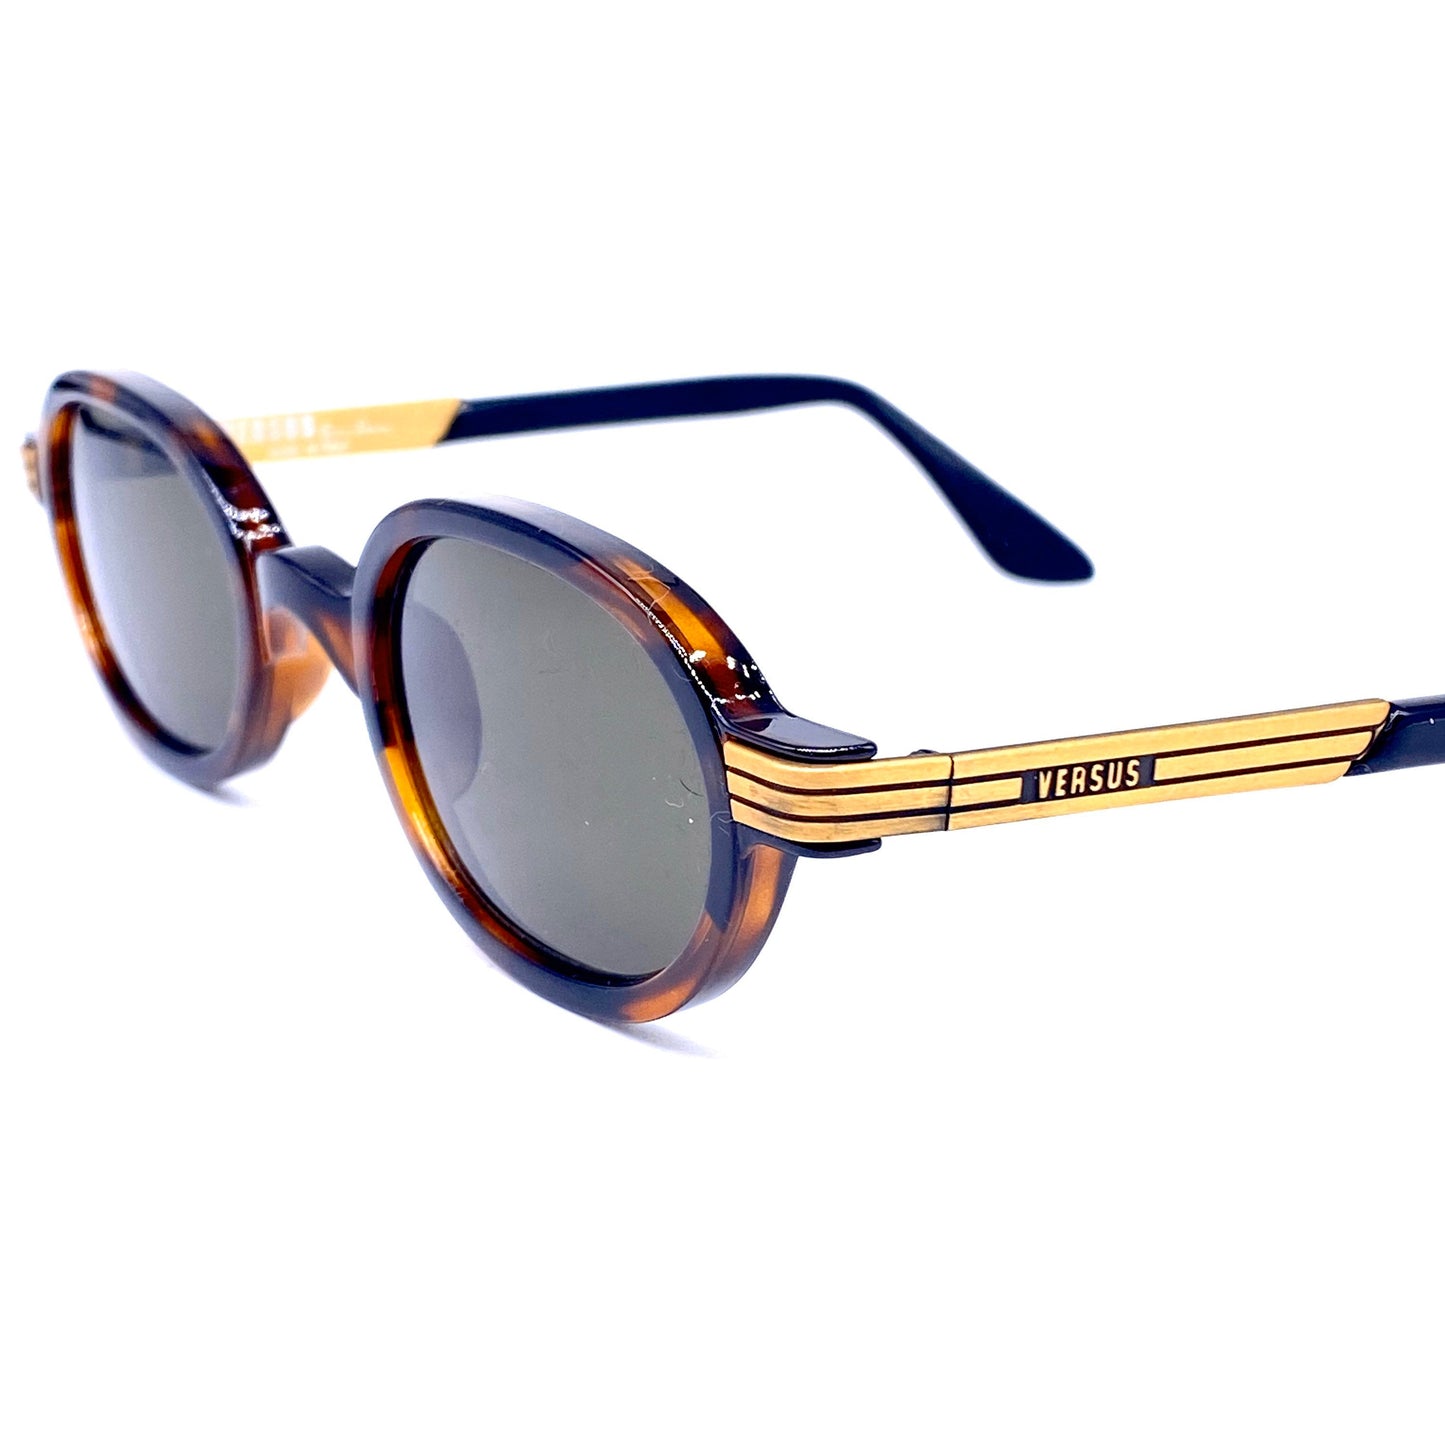 Gianni Versace E-23 retro oval tortoise sunglasses, 90s NOS